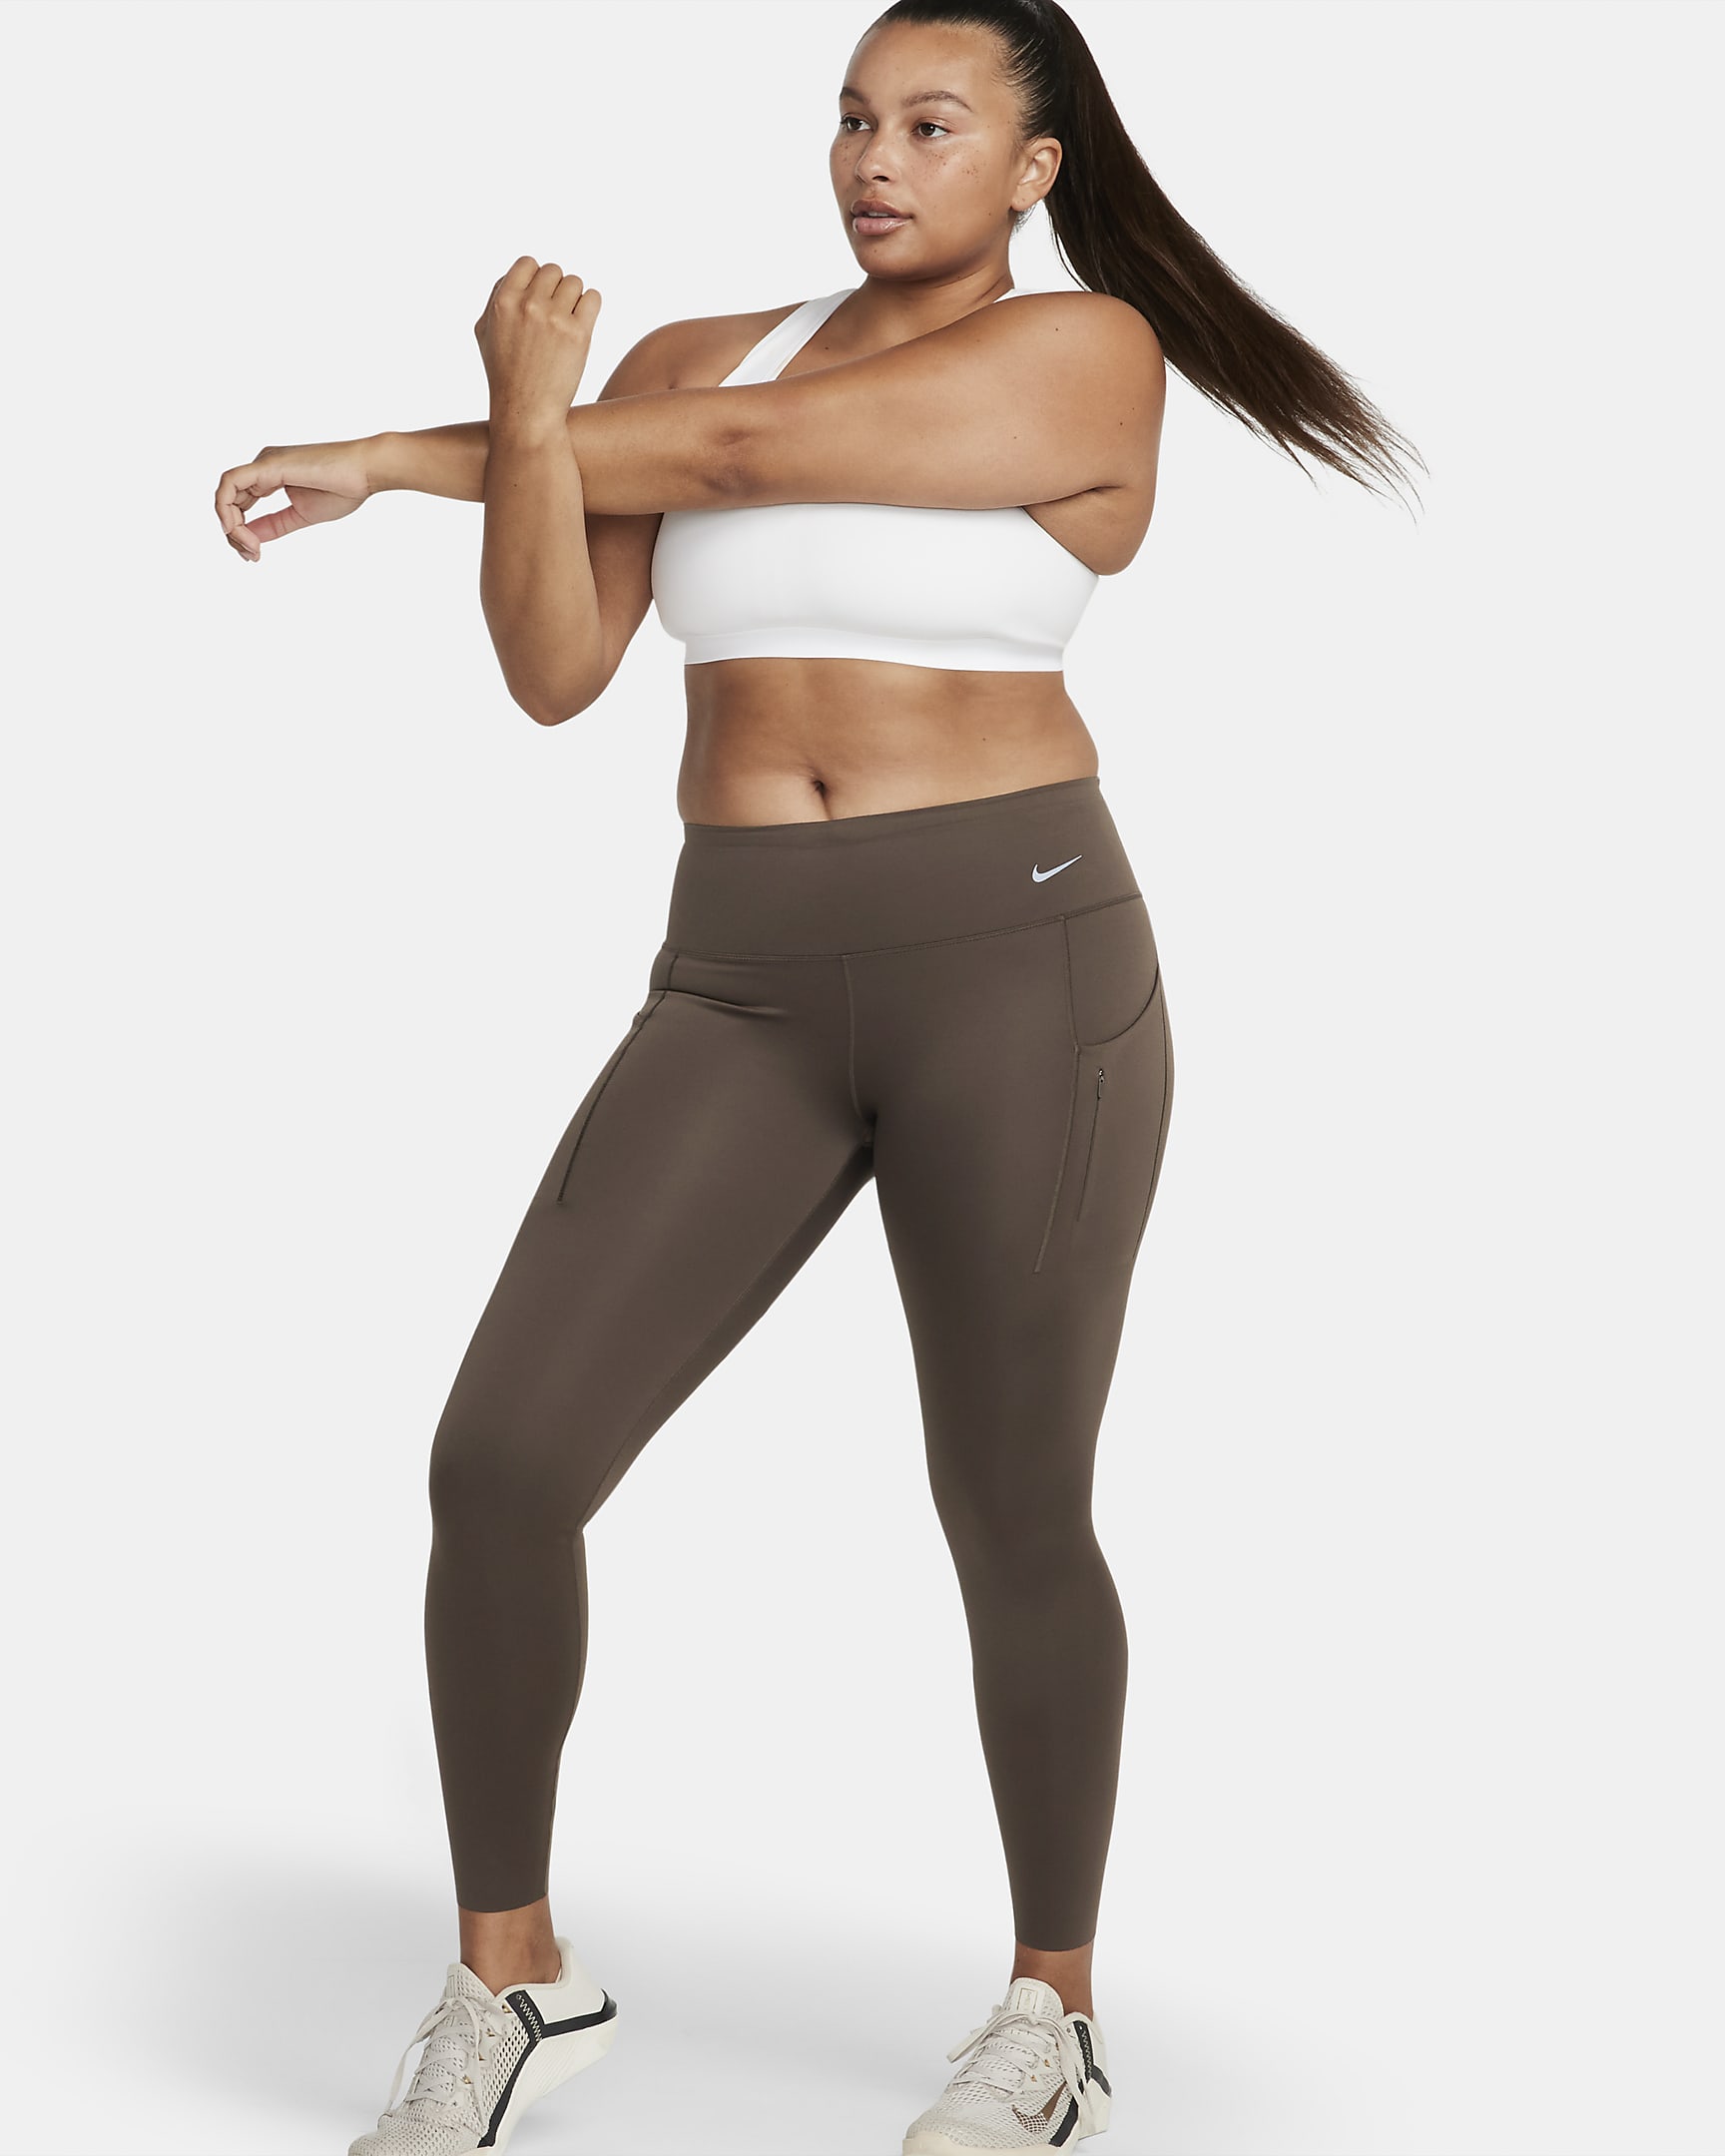 Nike Go Sıkı Destekli Normal Belli Cepli Tam Boy Kadın Taytı - Baroque Brown/Siyah